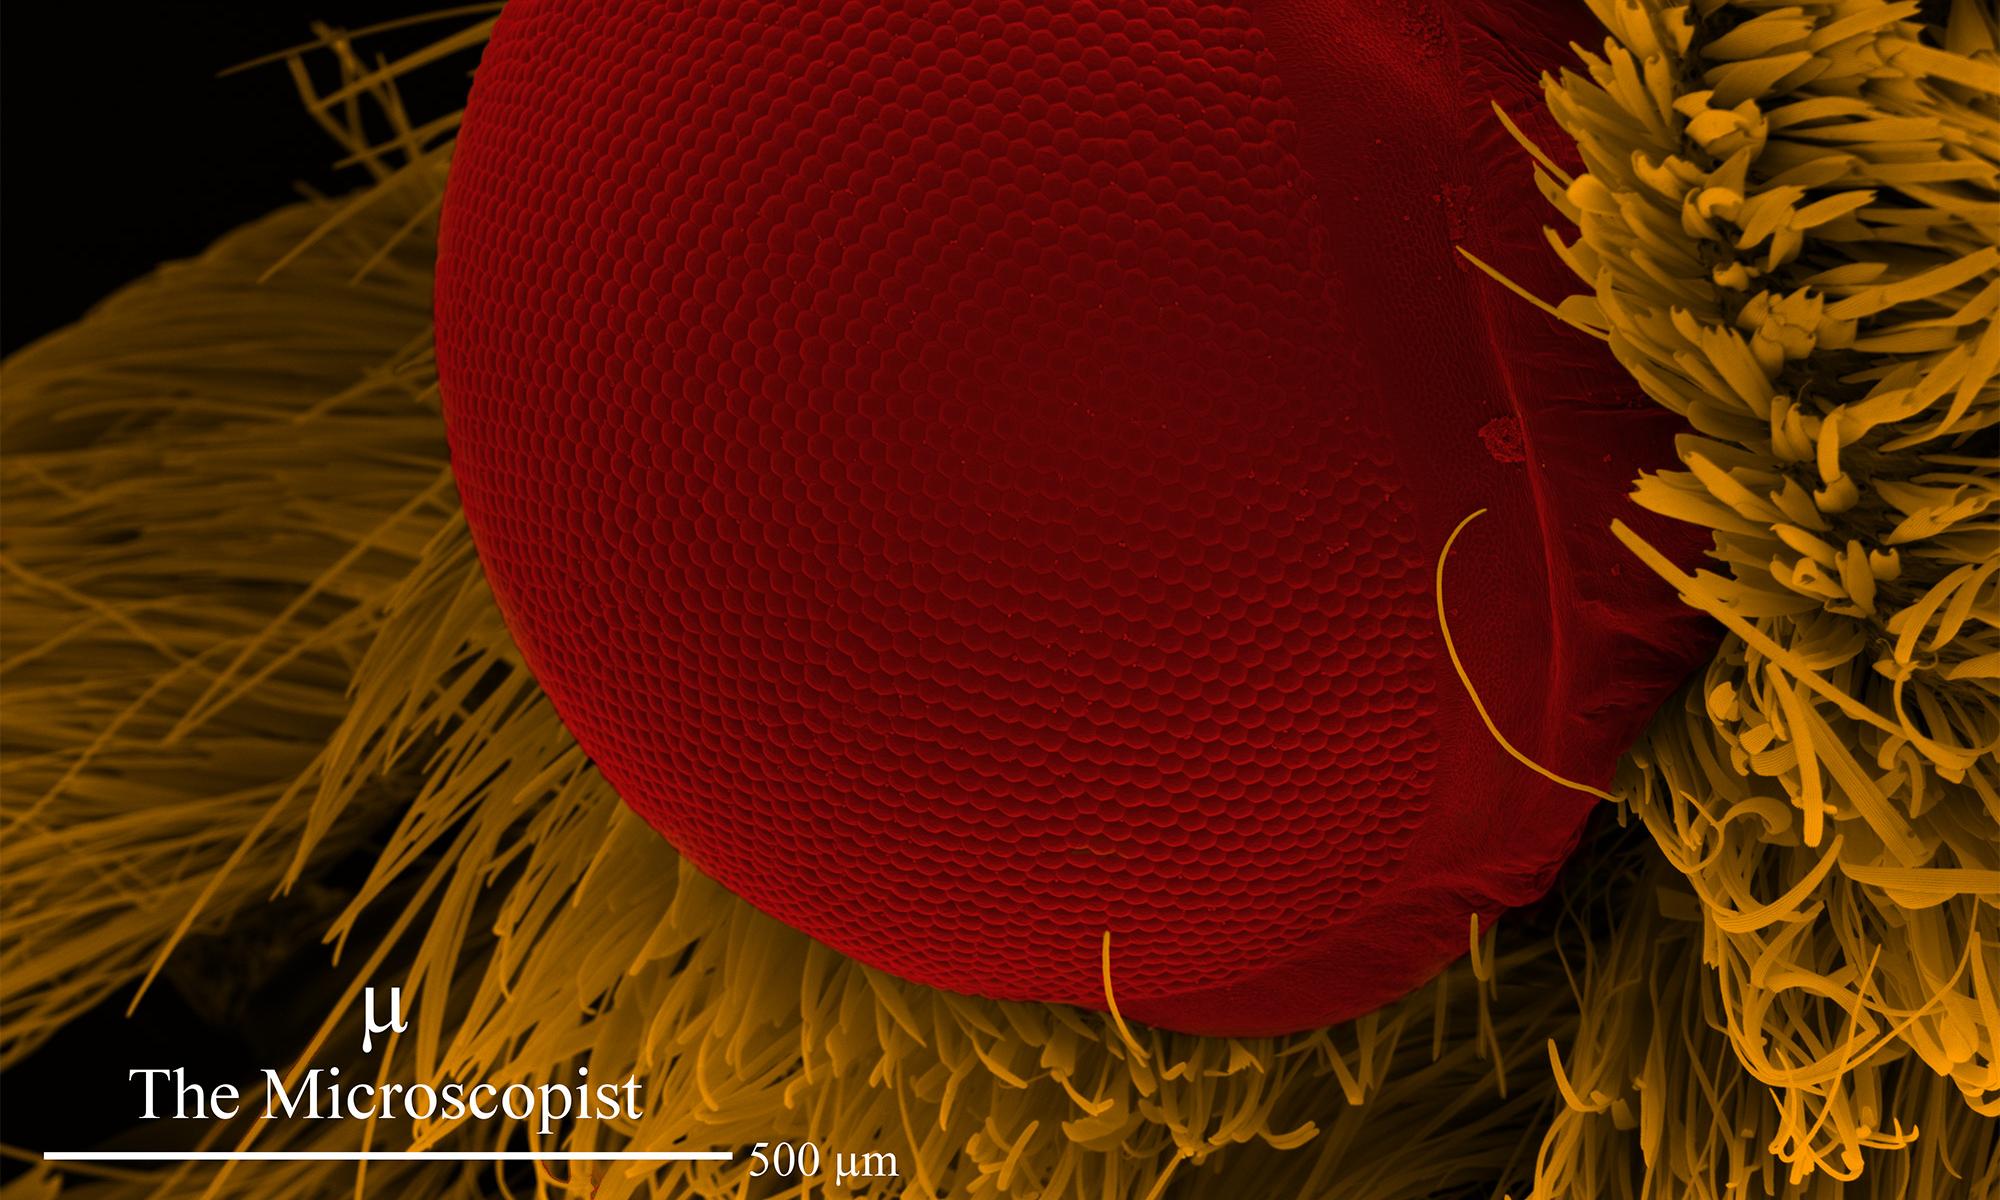 Daniel Oldfields microscopic image of a Moth's eye.